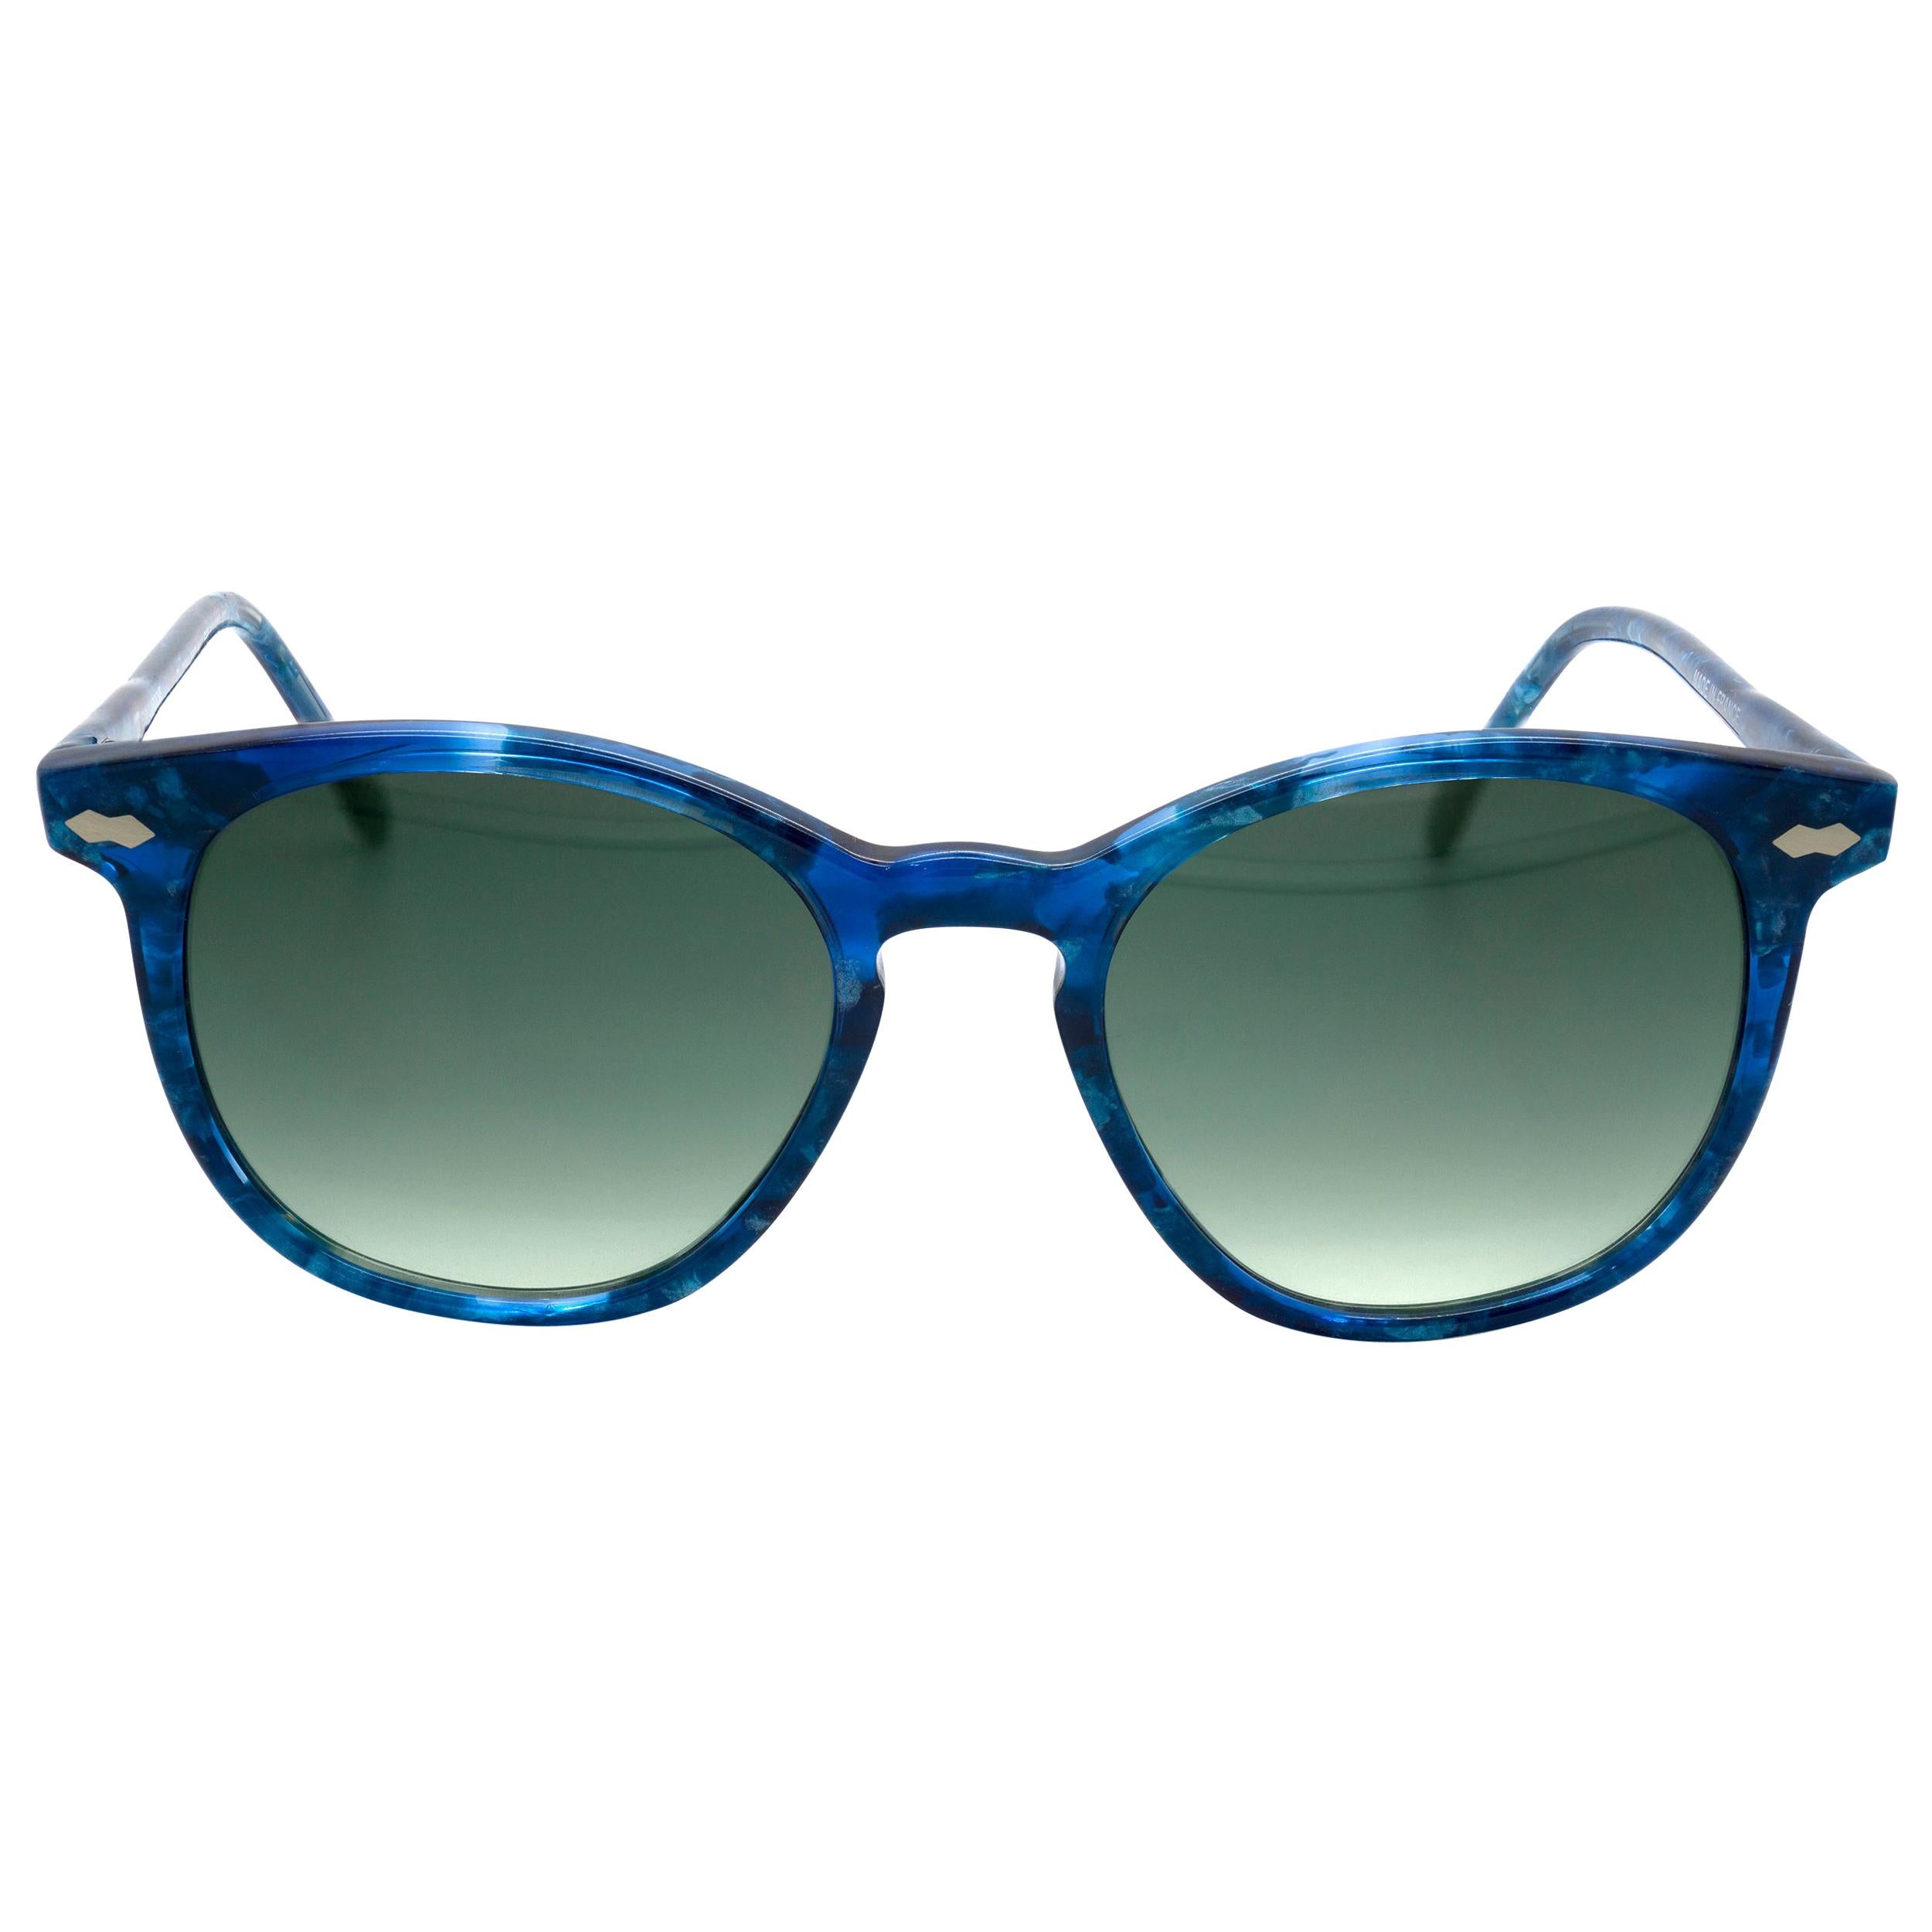 Guy Laroche vintage sunglasses, made in France